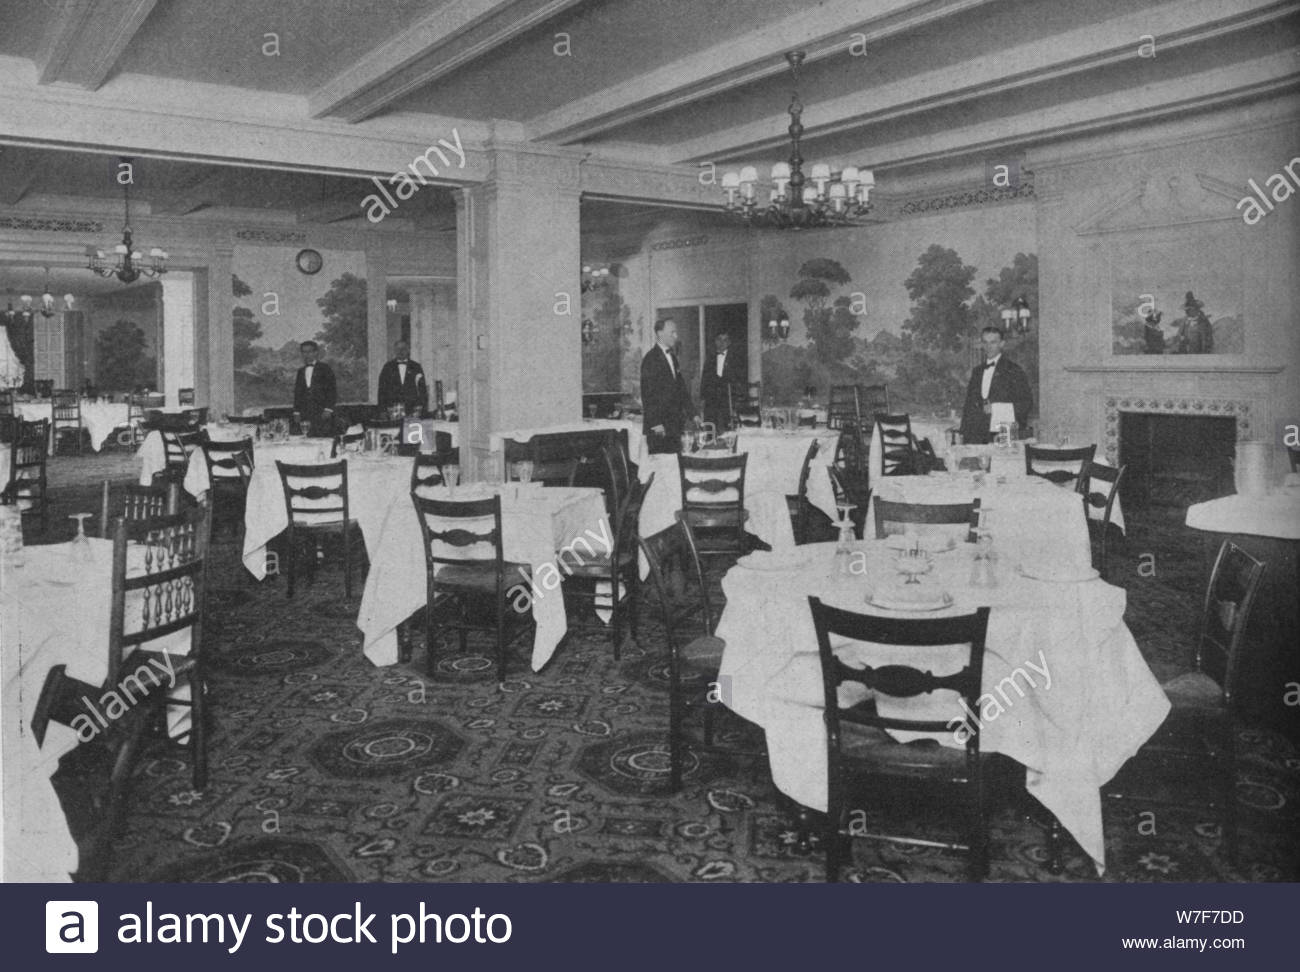 breakfast-room-roosevelt-hotel-new-york-city-1924-artist-unknown-W7F7DD.jpg